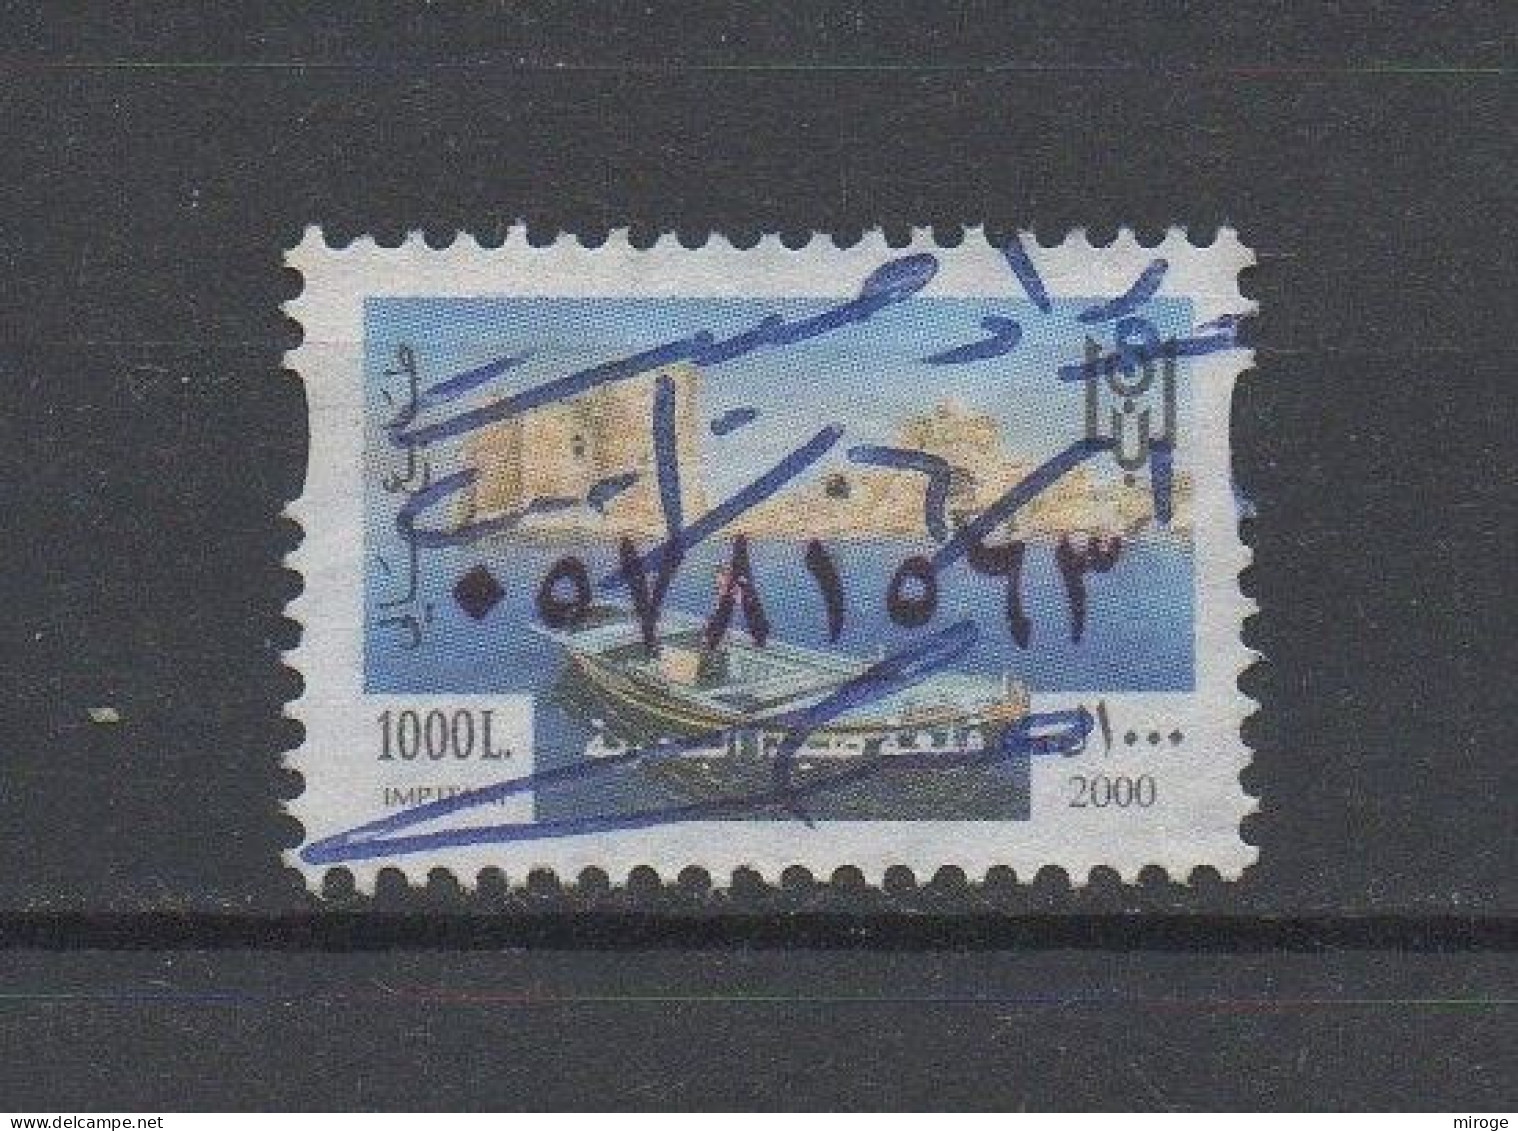 Saida Fortress 2000 1000LL Used Fiscal Revenue Stamp Lebanon , Liban Libano - Liban